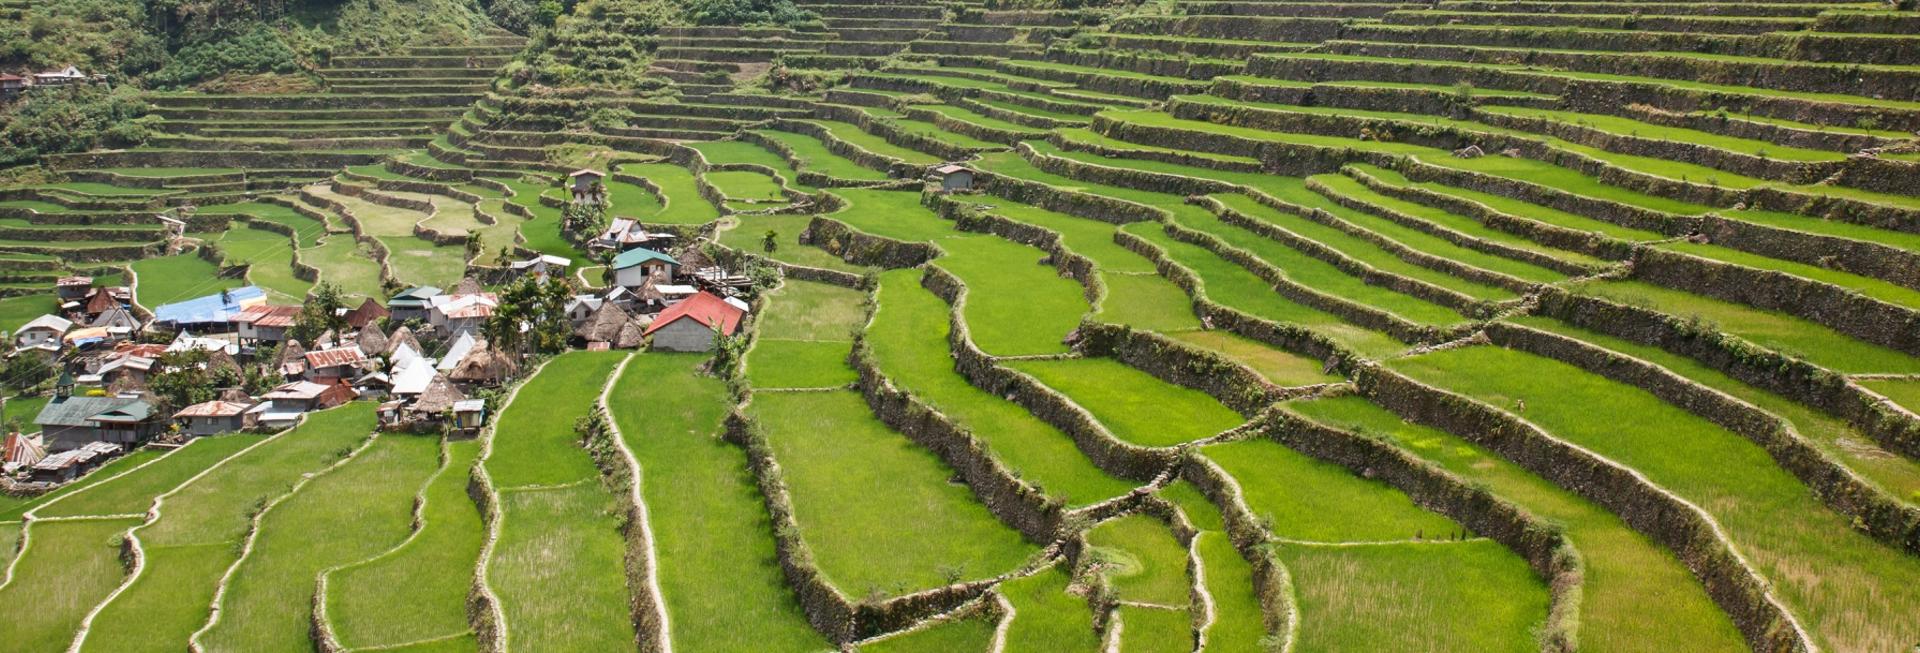 Village on rice terraces, Banuae, the Philippines